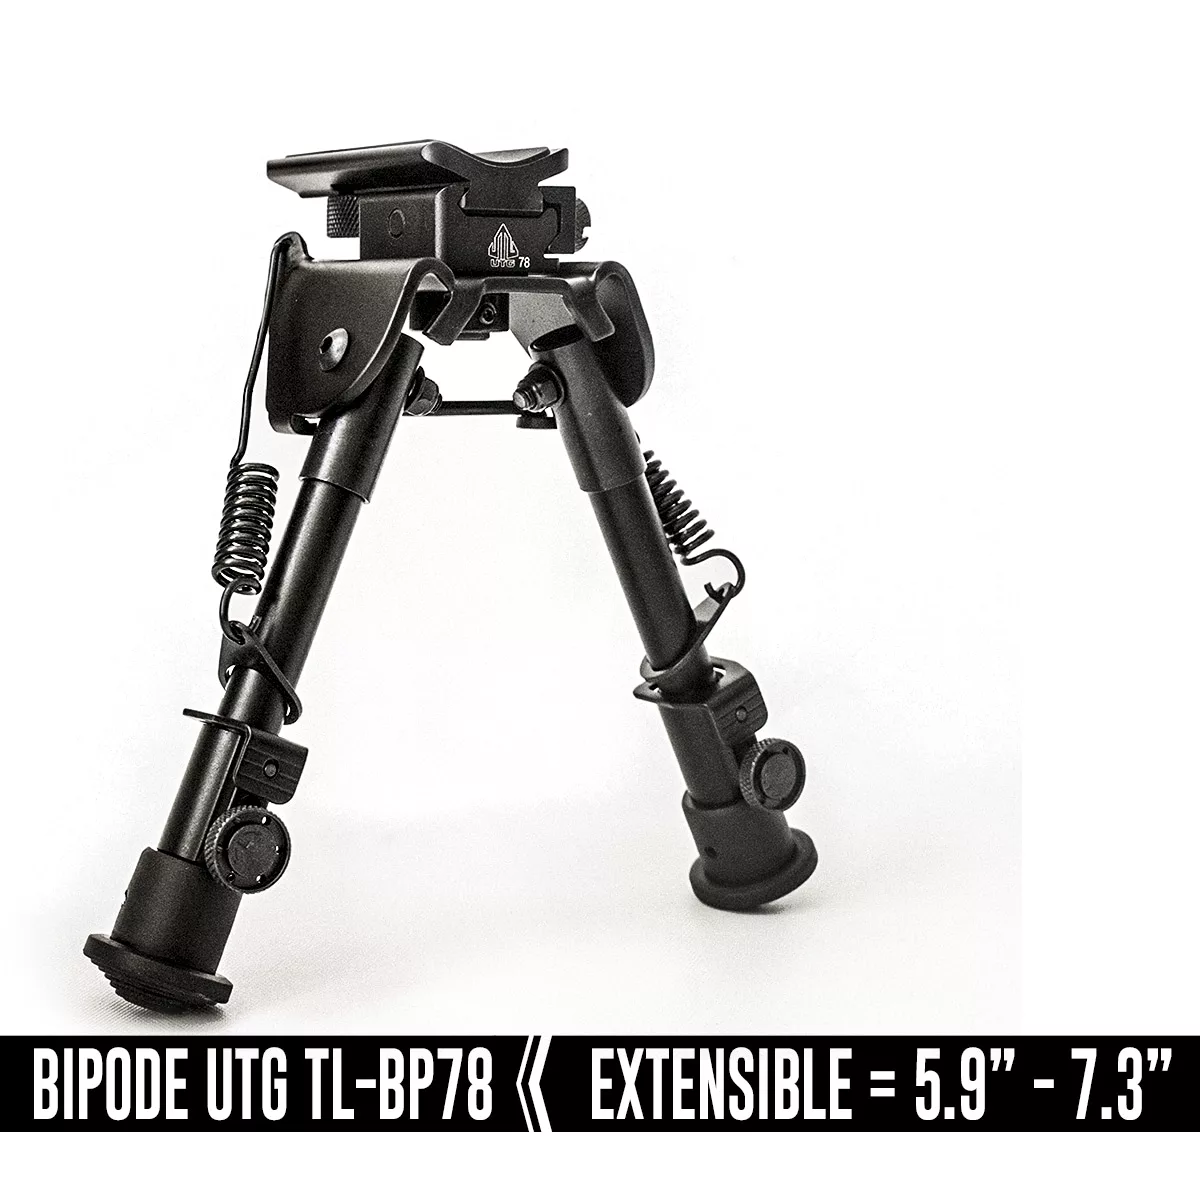 Bipode UTG TL-BP88 // Tactico - Extensible - Colihue Aventura